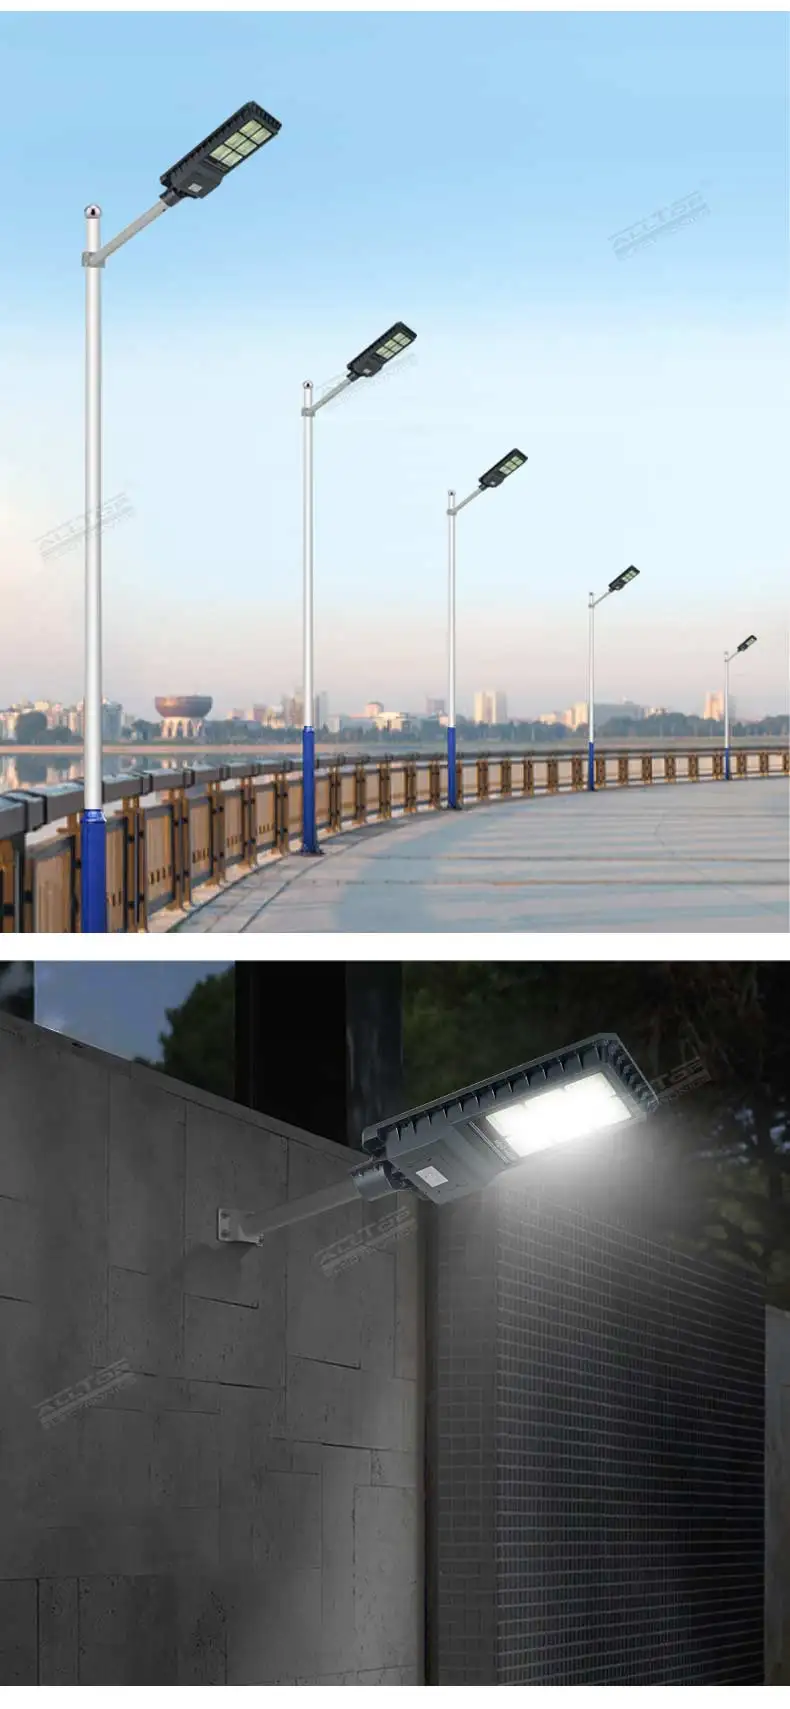 Energy Saving outdoor lighting smd Ip65 aluminium alloy 200w 300w 450w All In One Led Solar Street Light